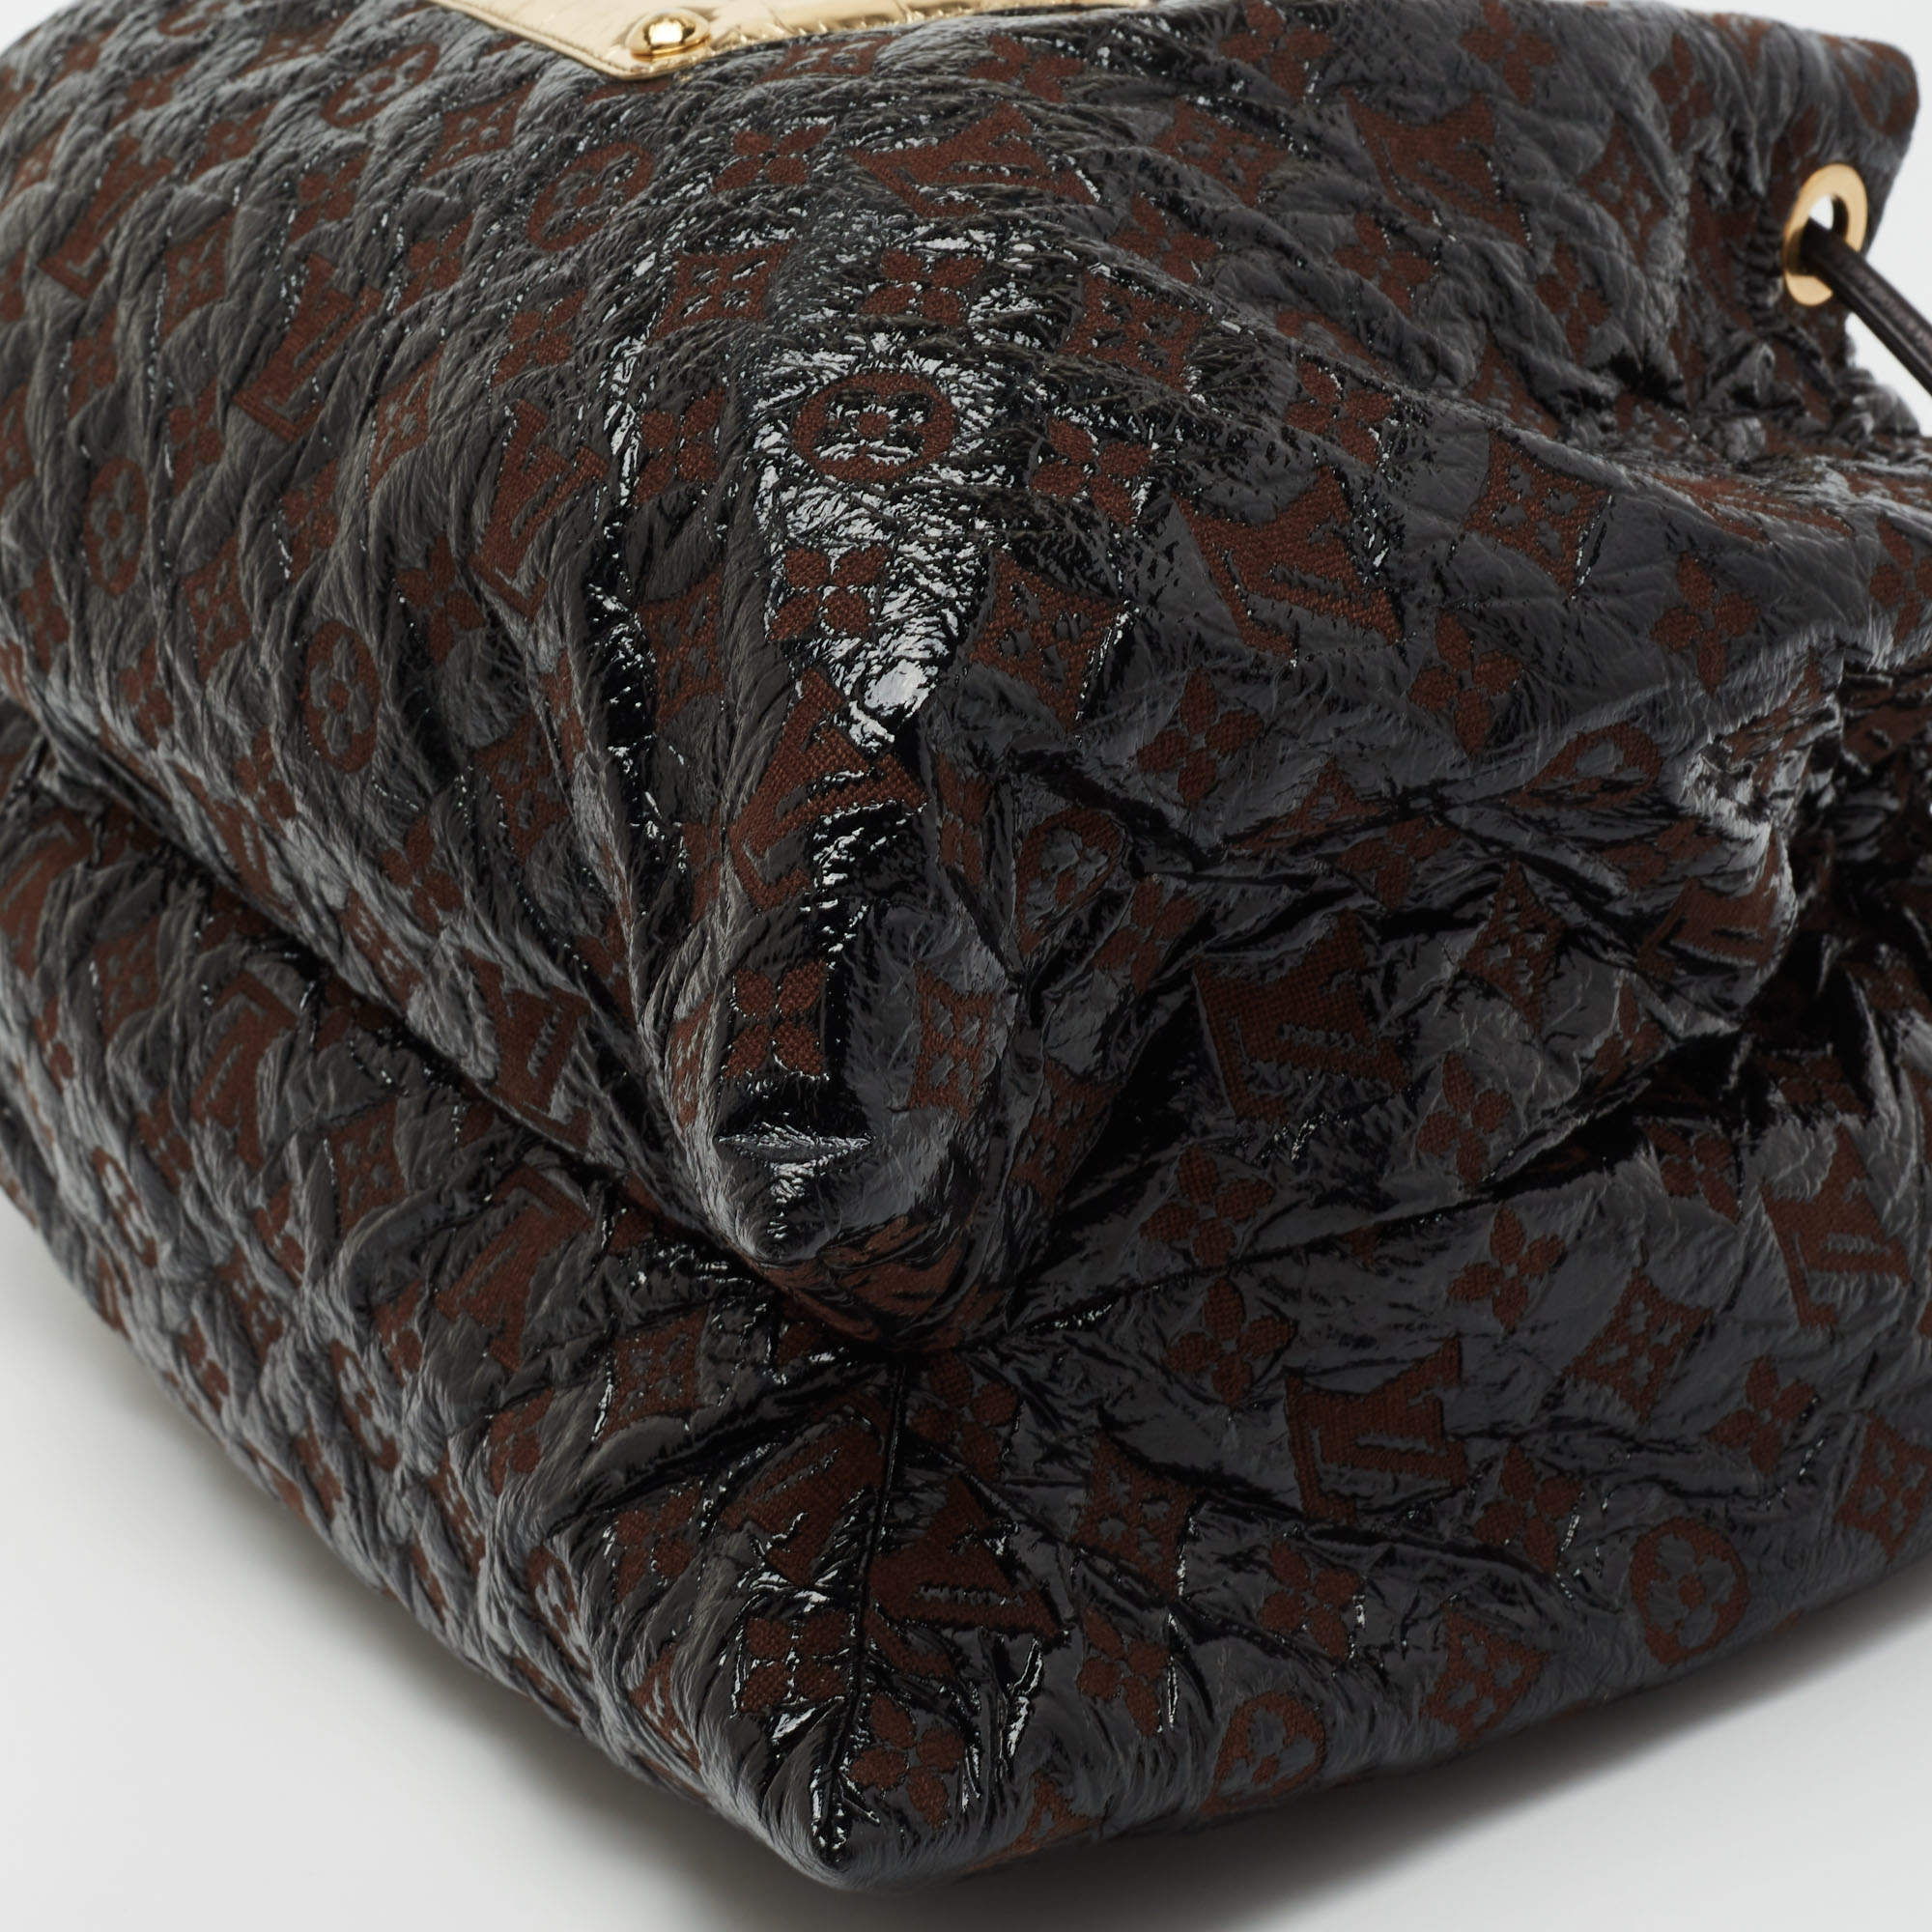 Louis Vuitton Monogram Vinyl Squishy Tote Bag Black